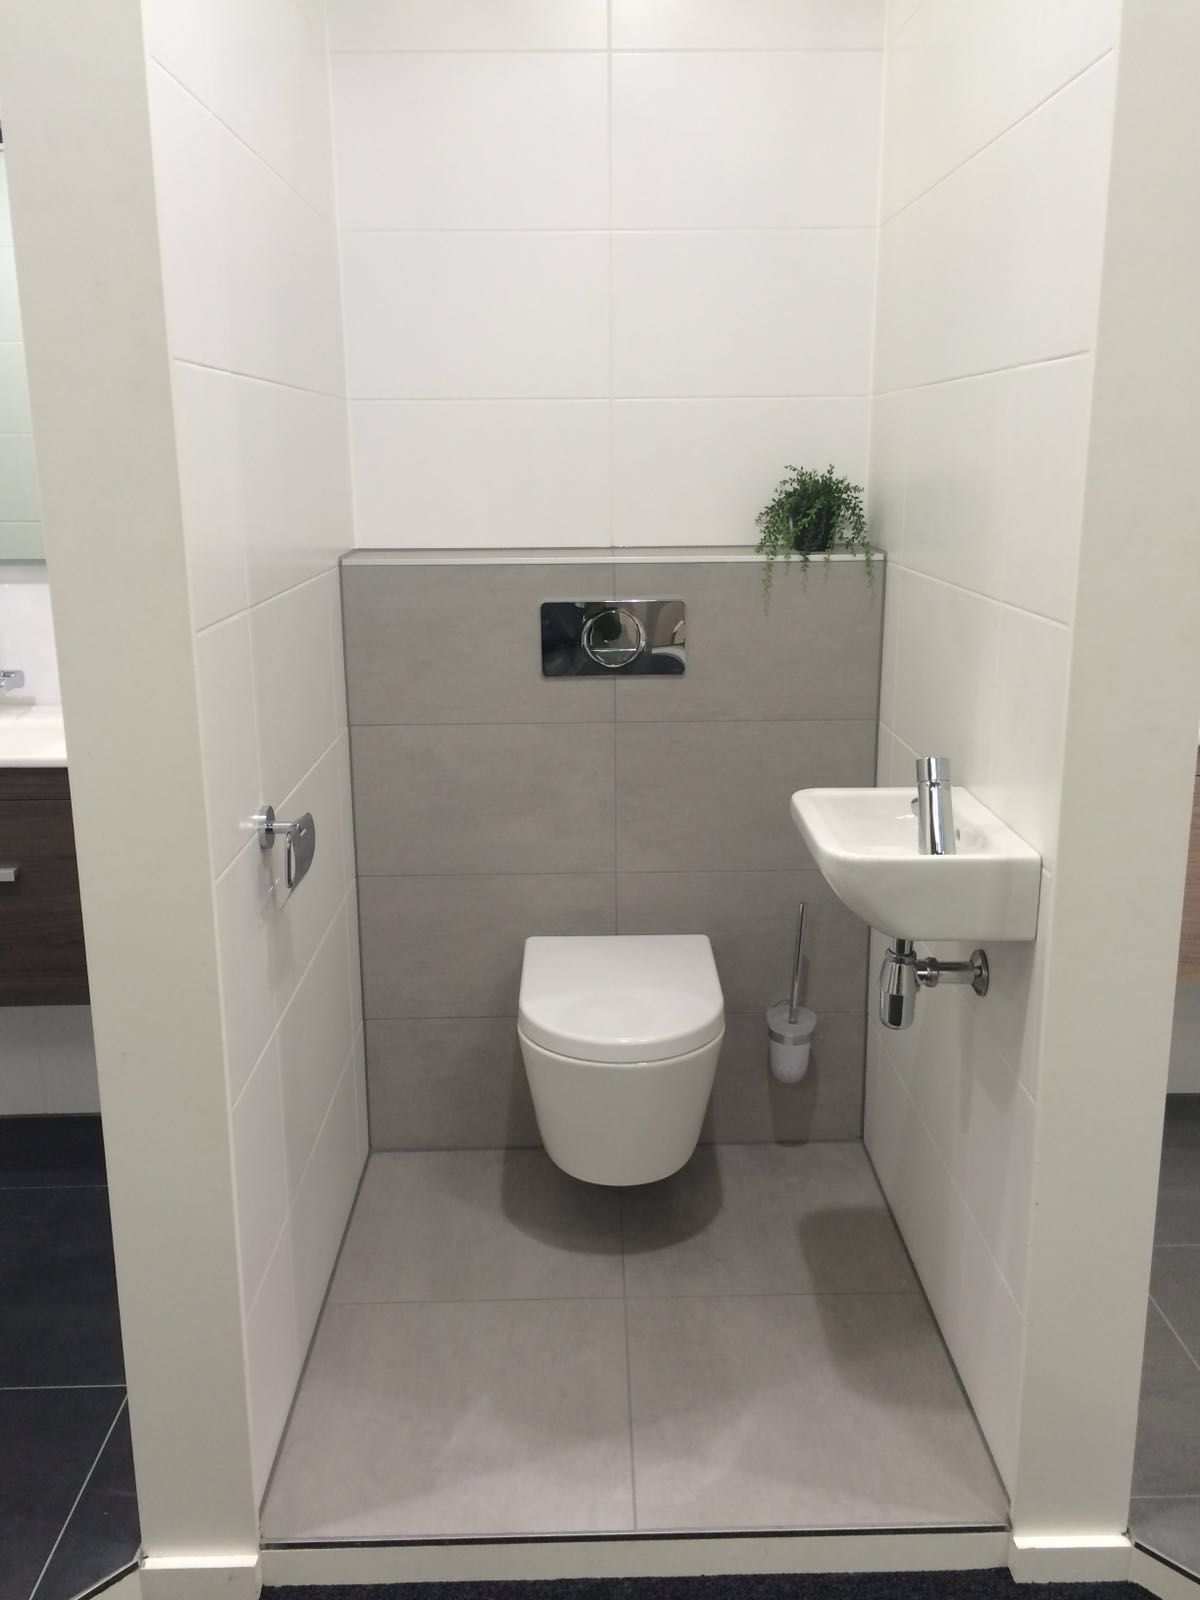 Hellgrau Bathroom Toilet Wc Badkamer Muurtje Toiletpot Mosa Tegels